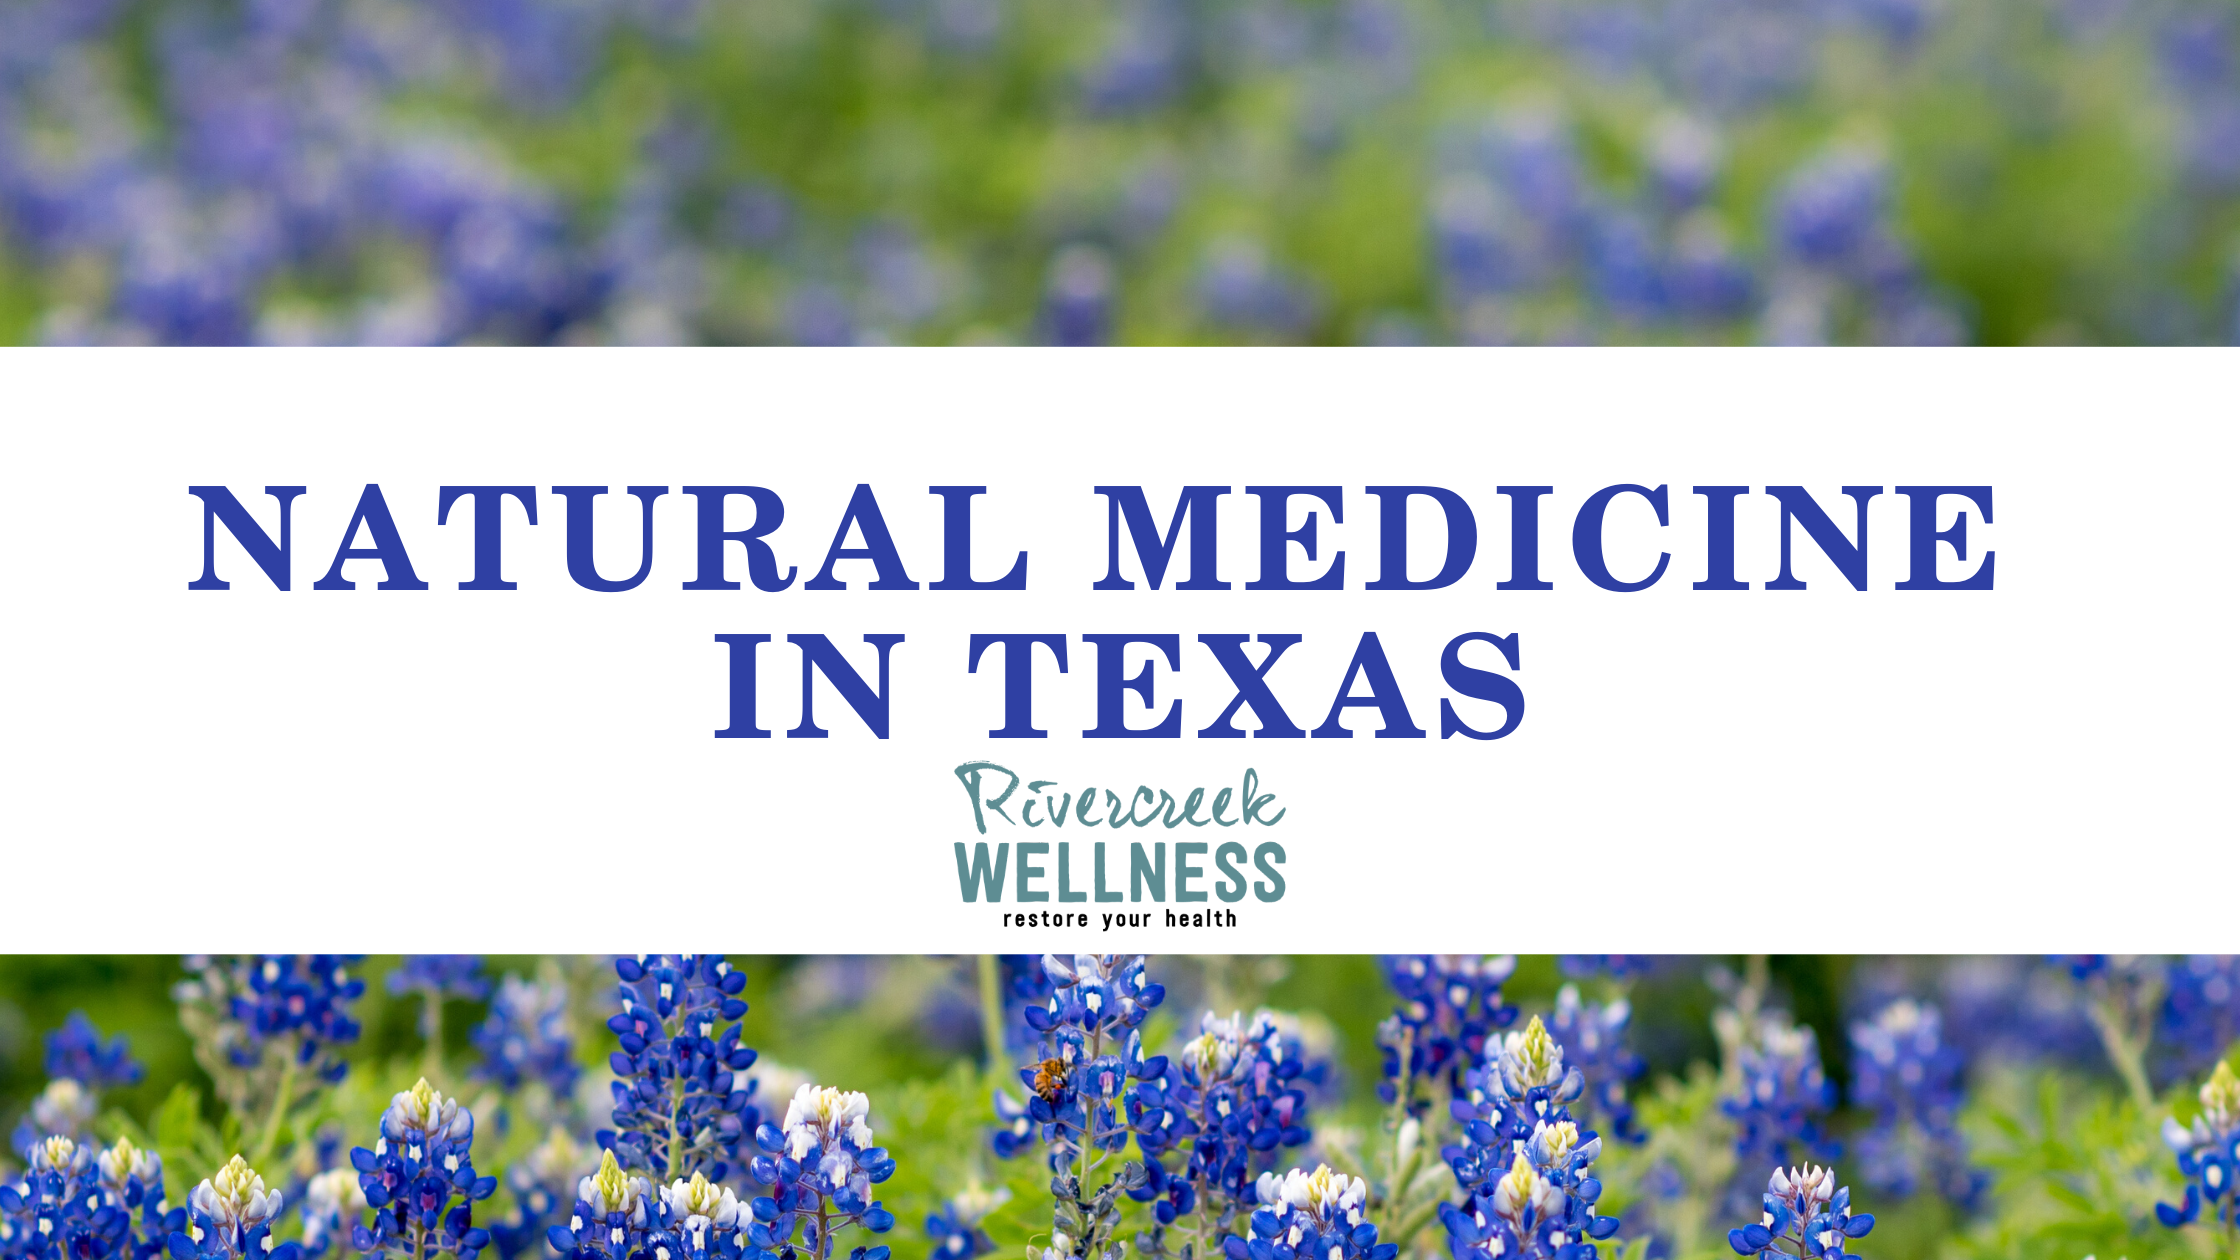 Natural Medicine In Texas Rivercreek Wellness